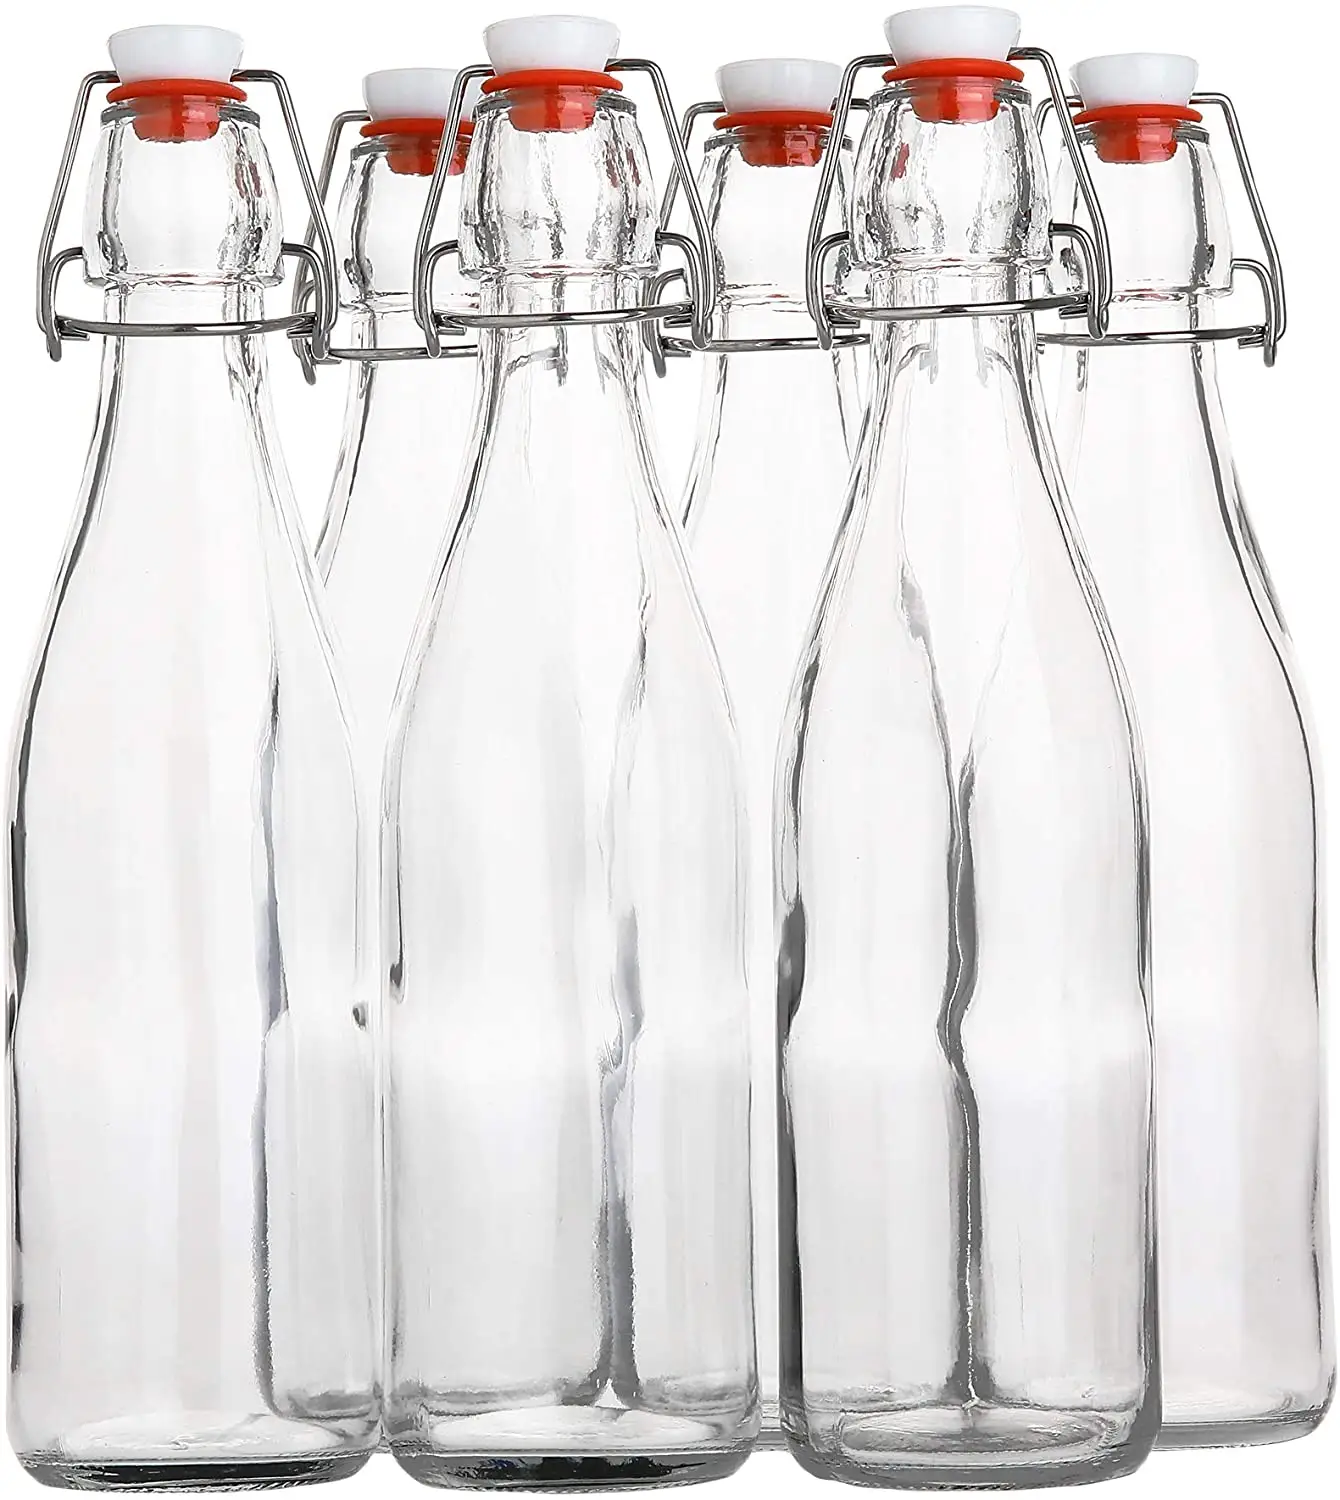 Flip Top Glass Bottle 500 ml/ 16 fl. oz Reusable Swing Top Brewing Bottle with Stopper for Beverage